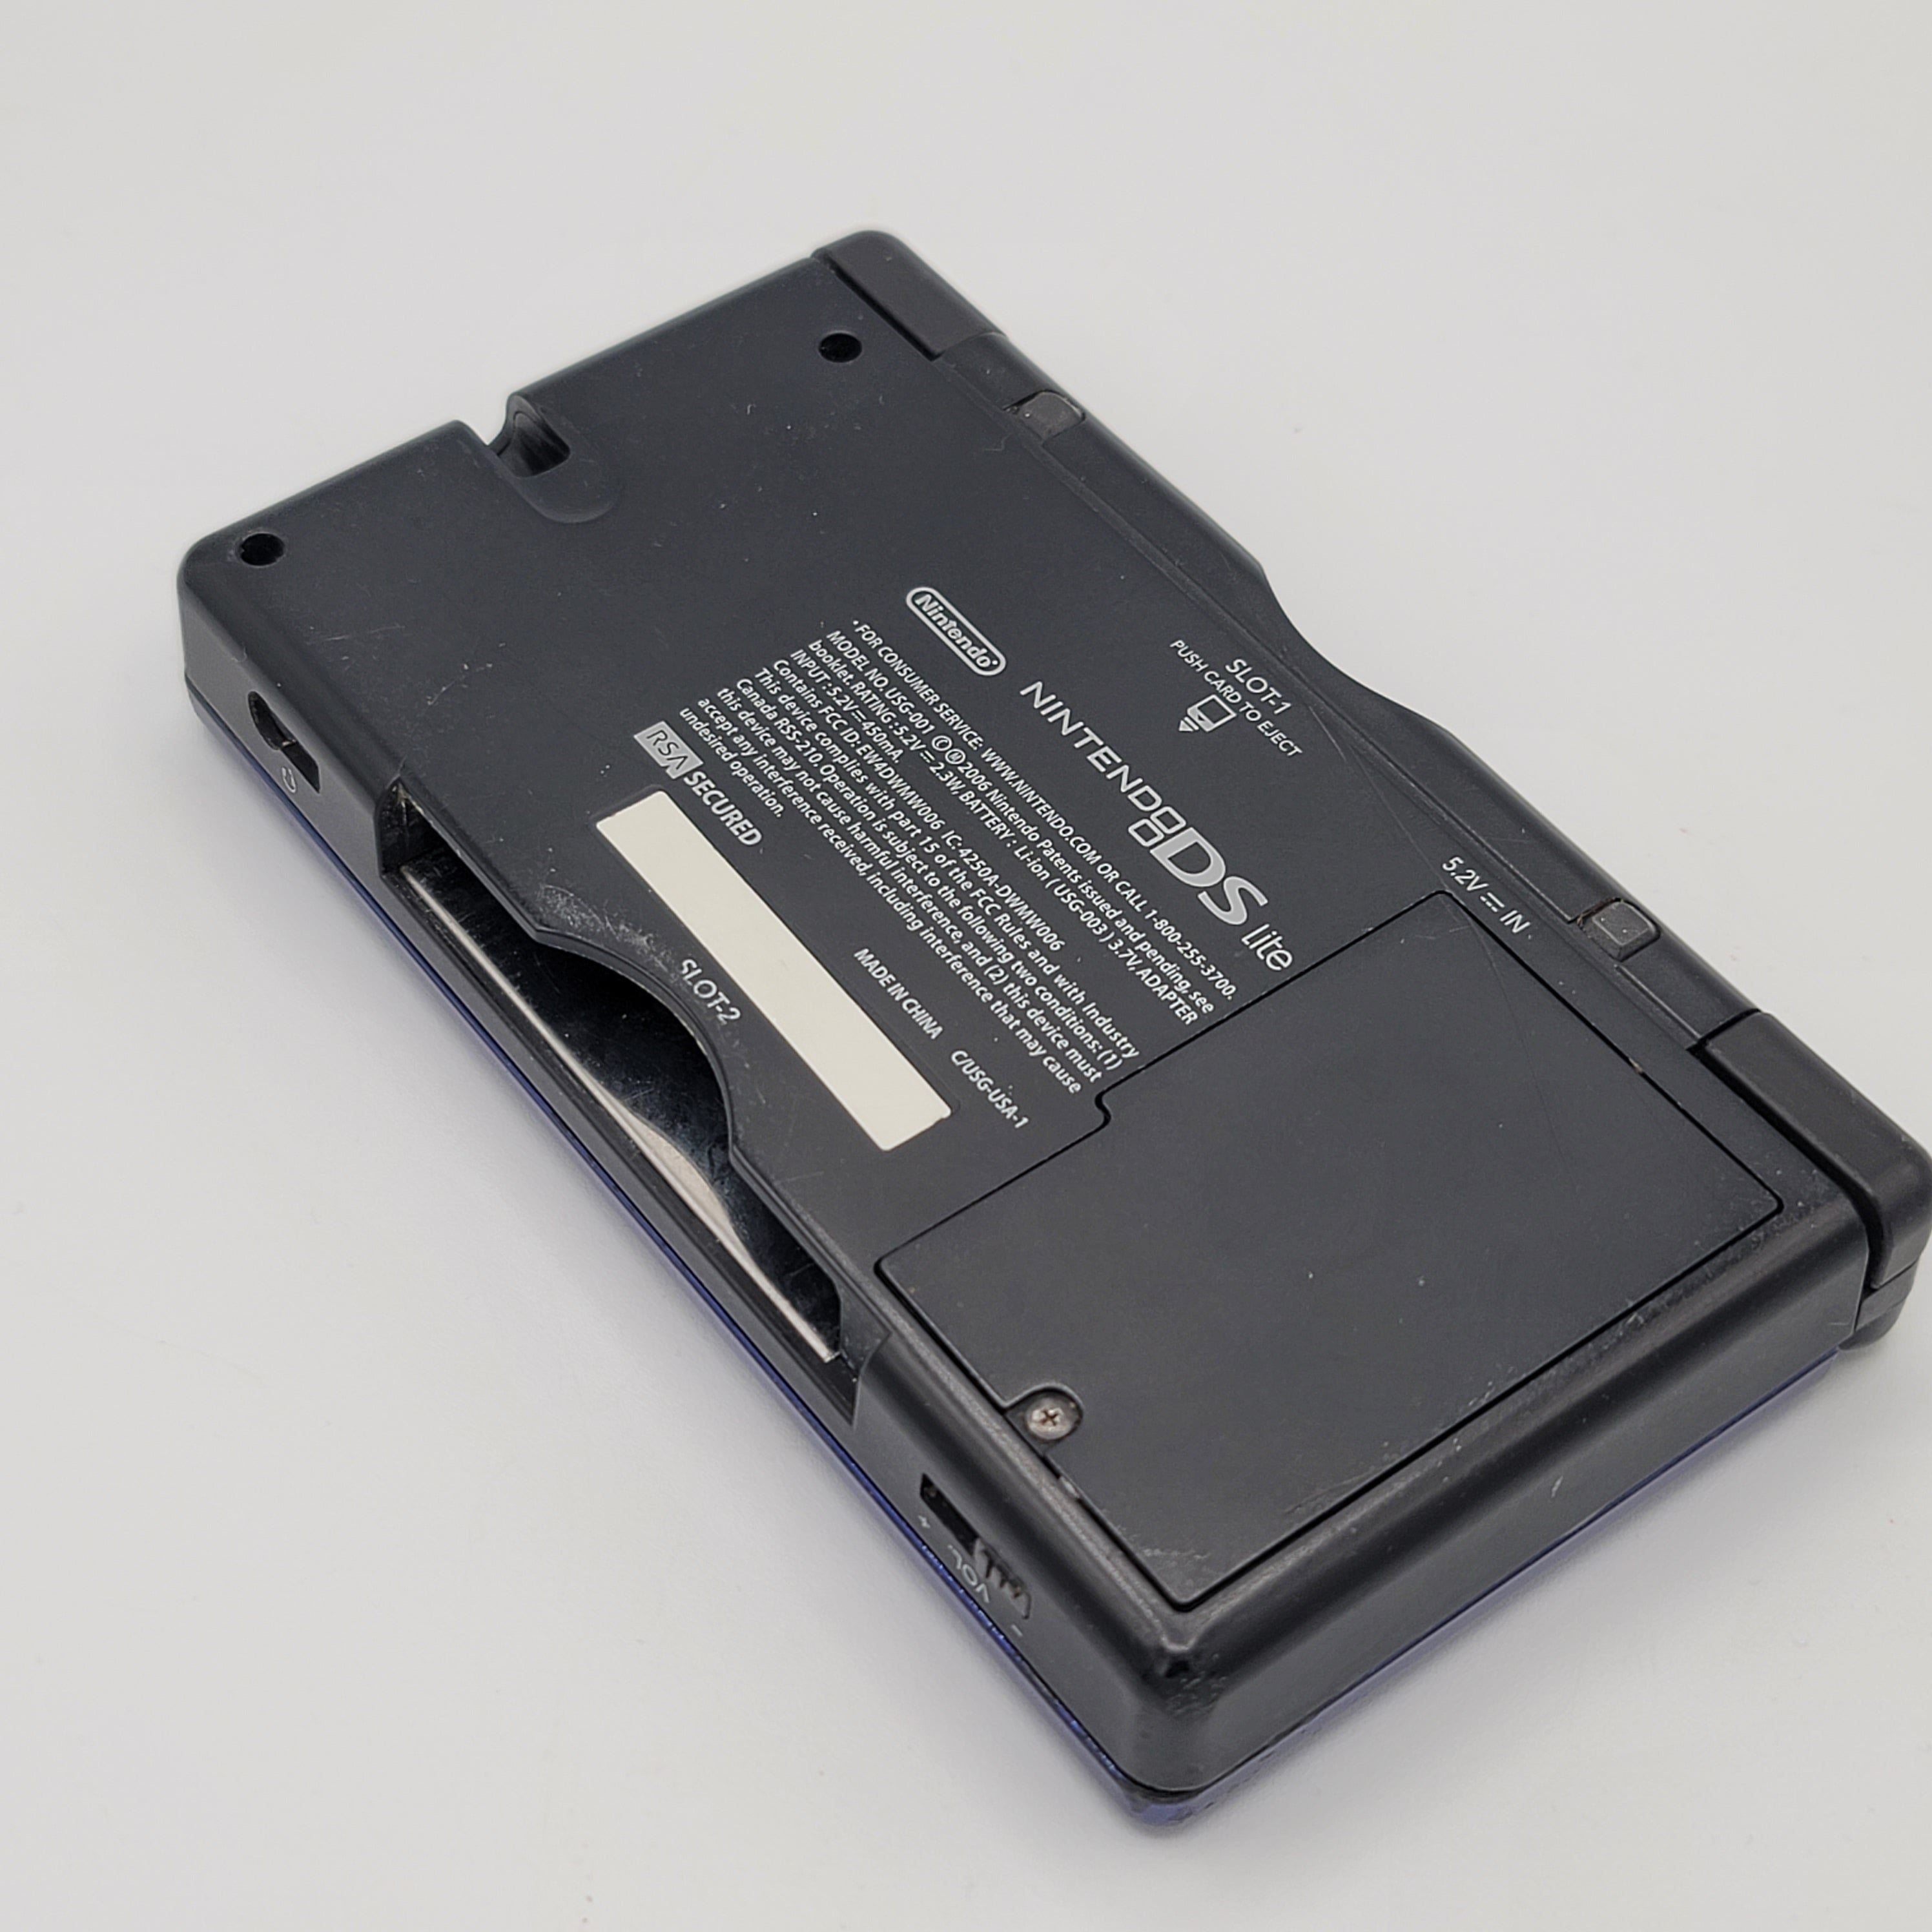 DS Lite System (Blue / Reduced)